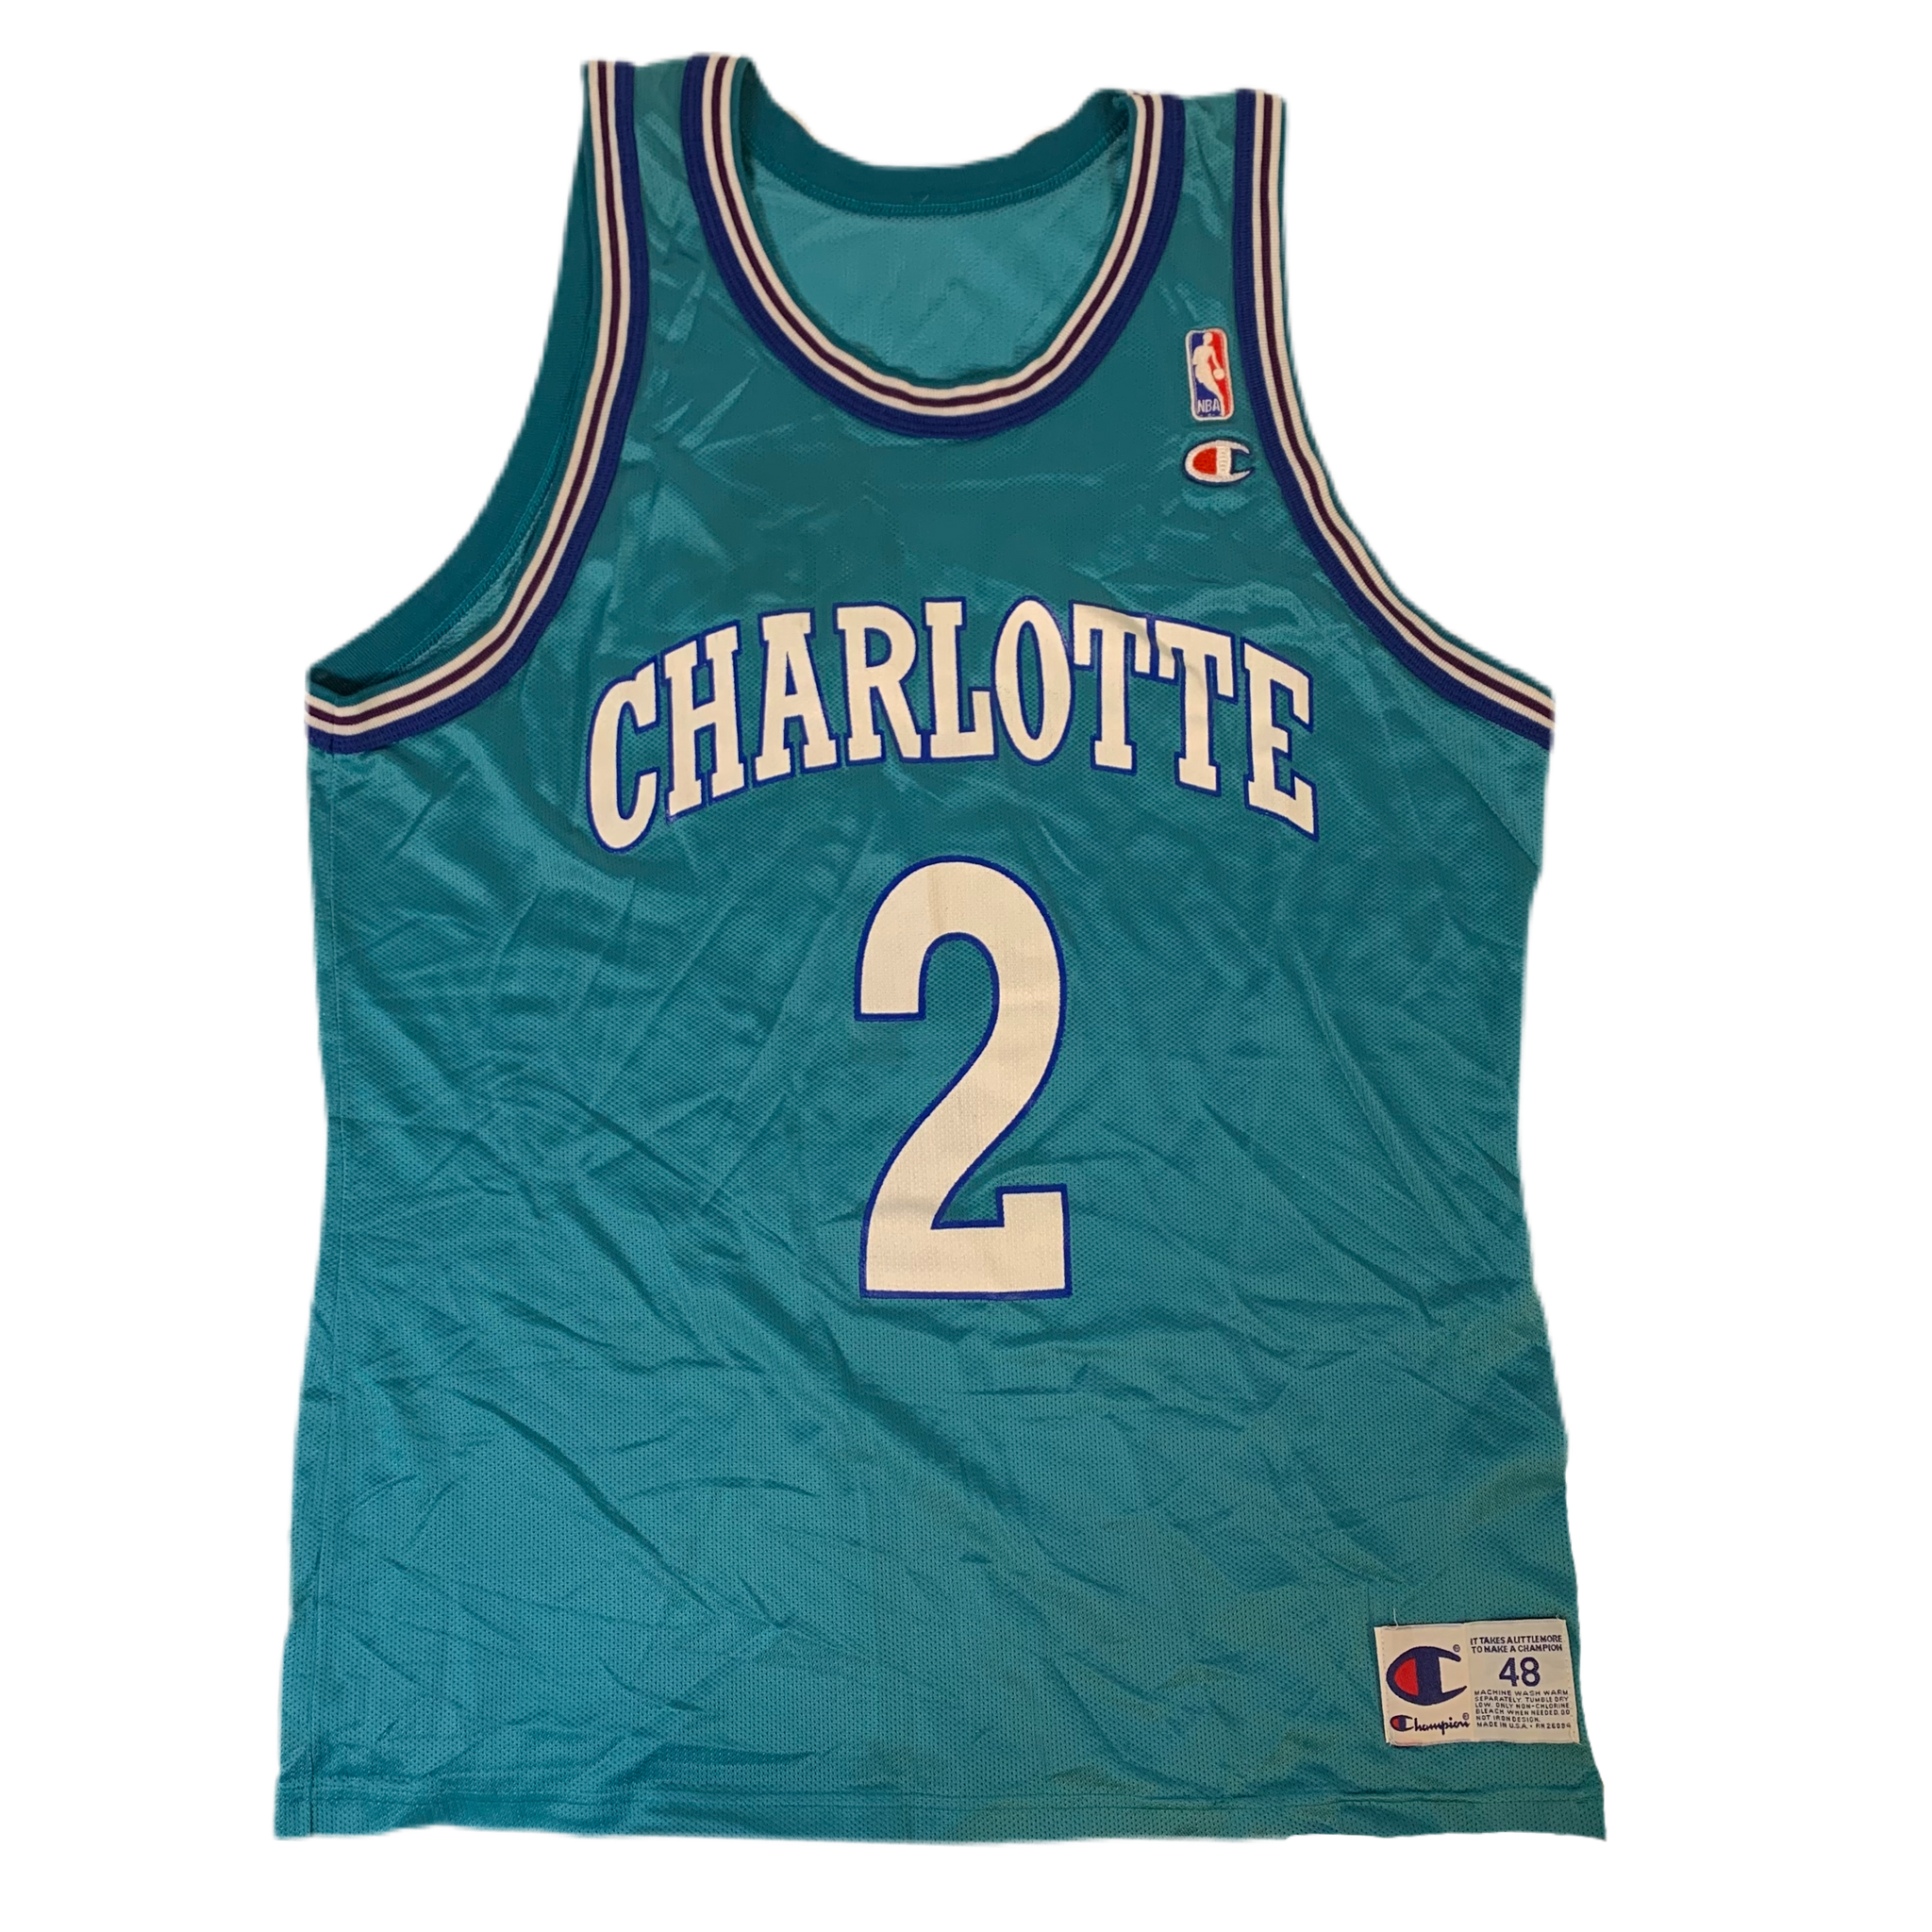 Vintage Champion NBA basketball jerseys - clothing & accessories